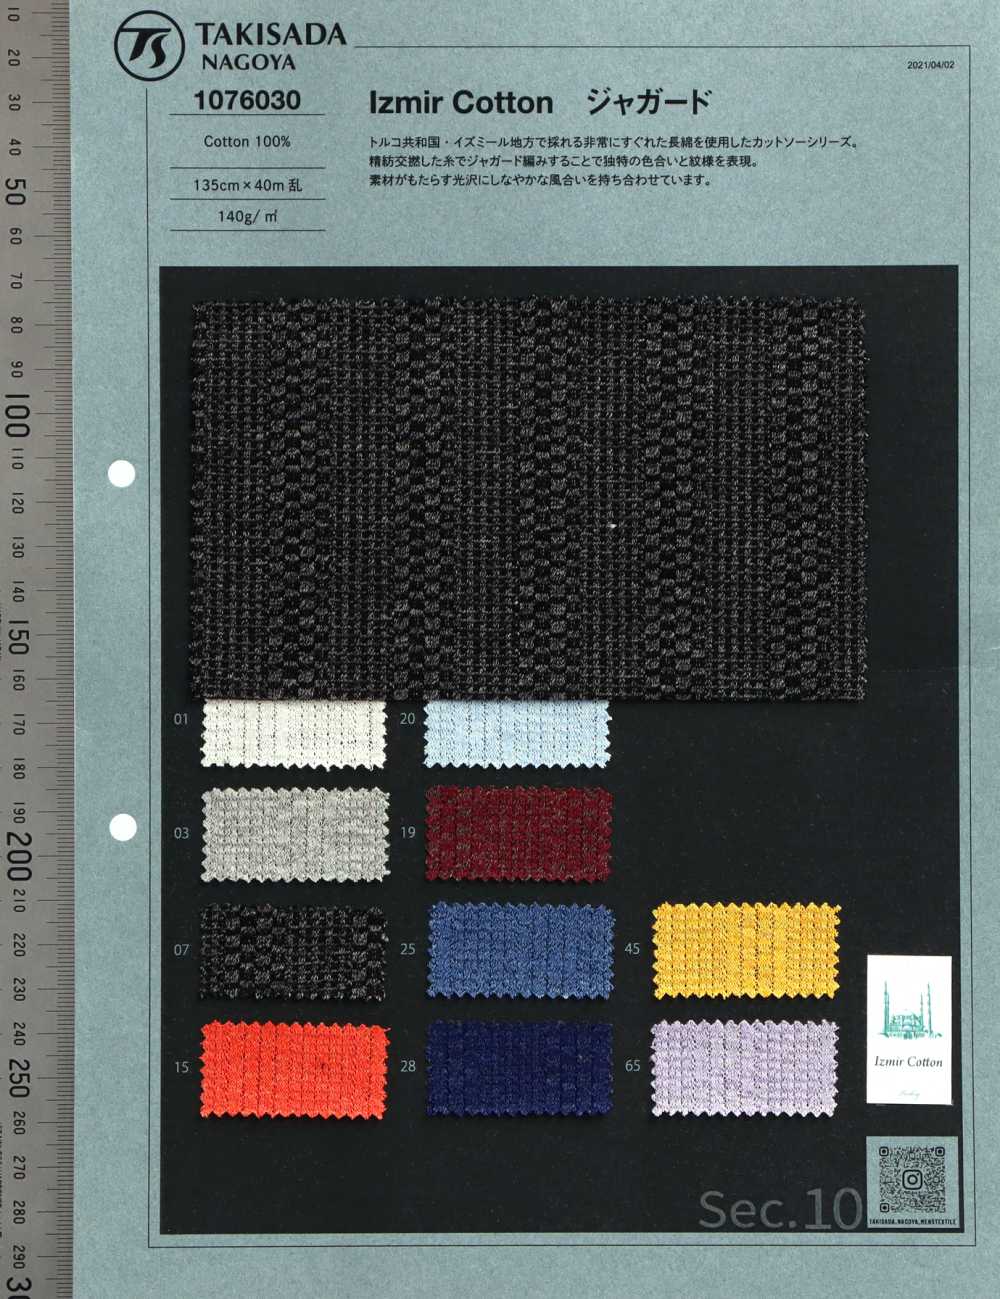 1076030 Izmir-Baumwoll-Jacquard[Textilgewebe] Takisada Nagoya